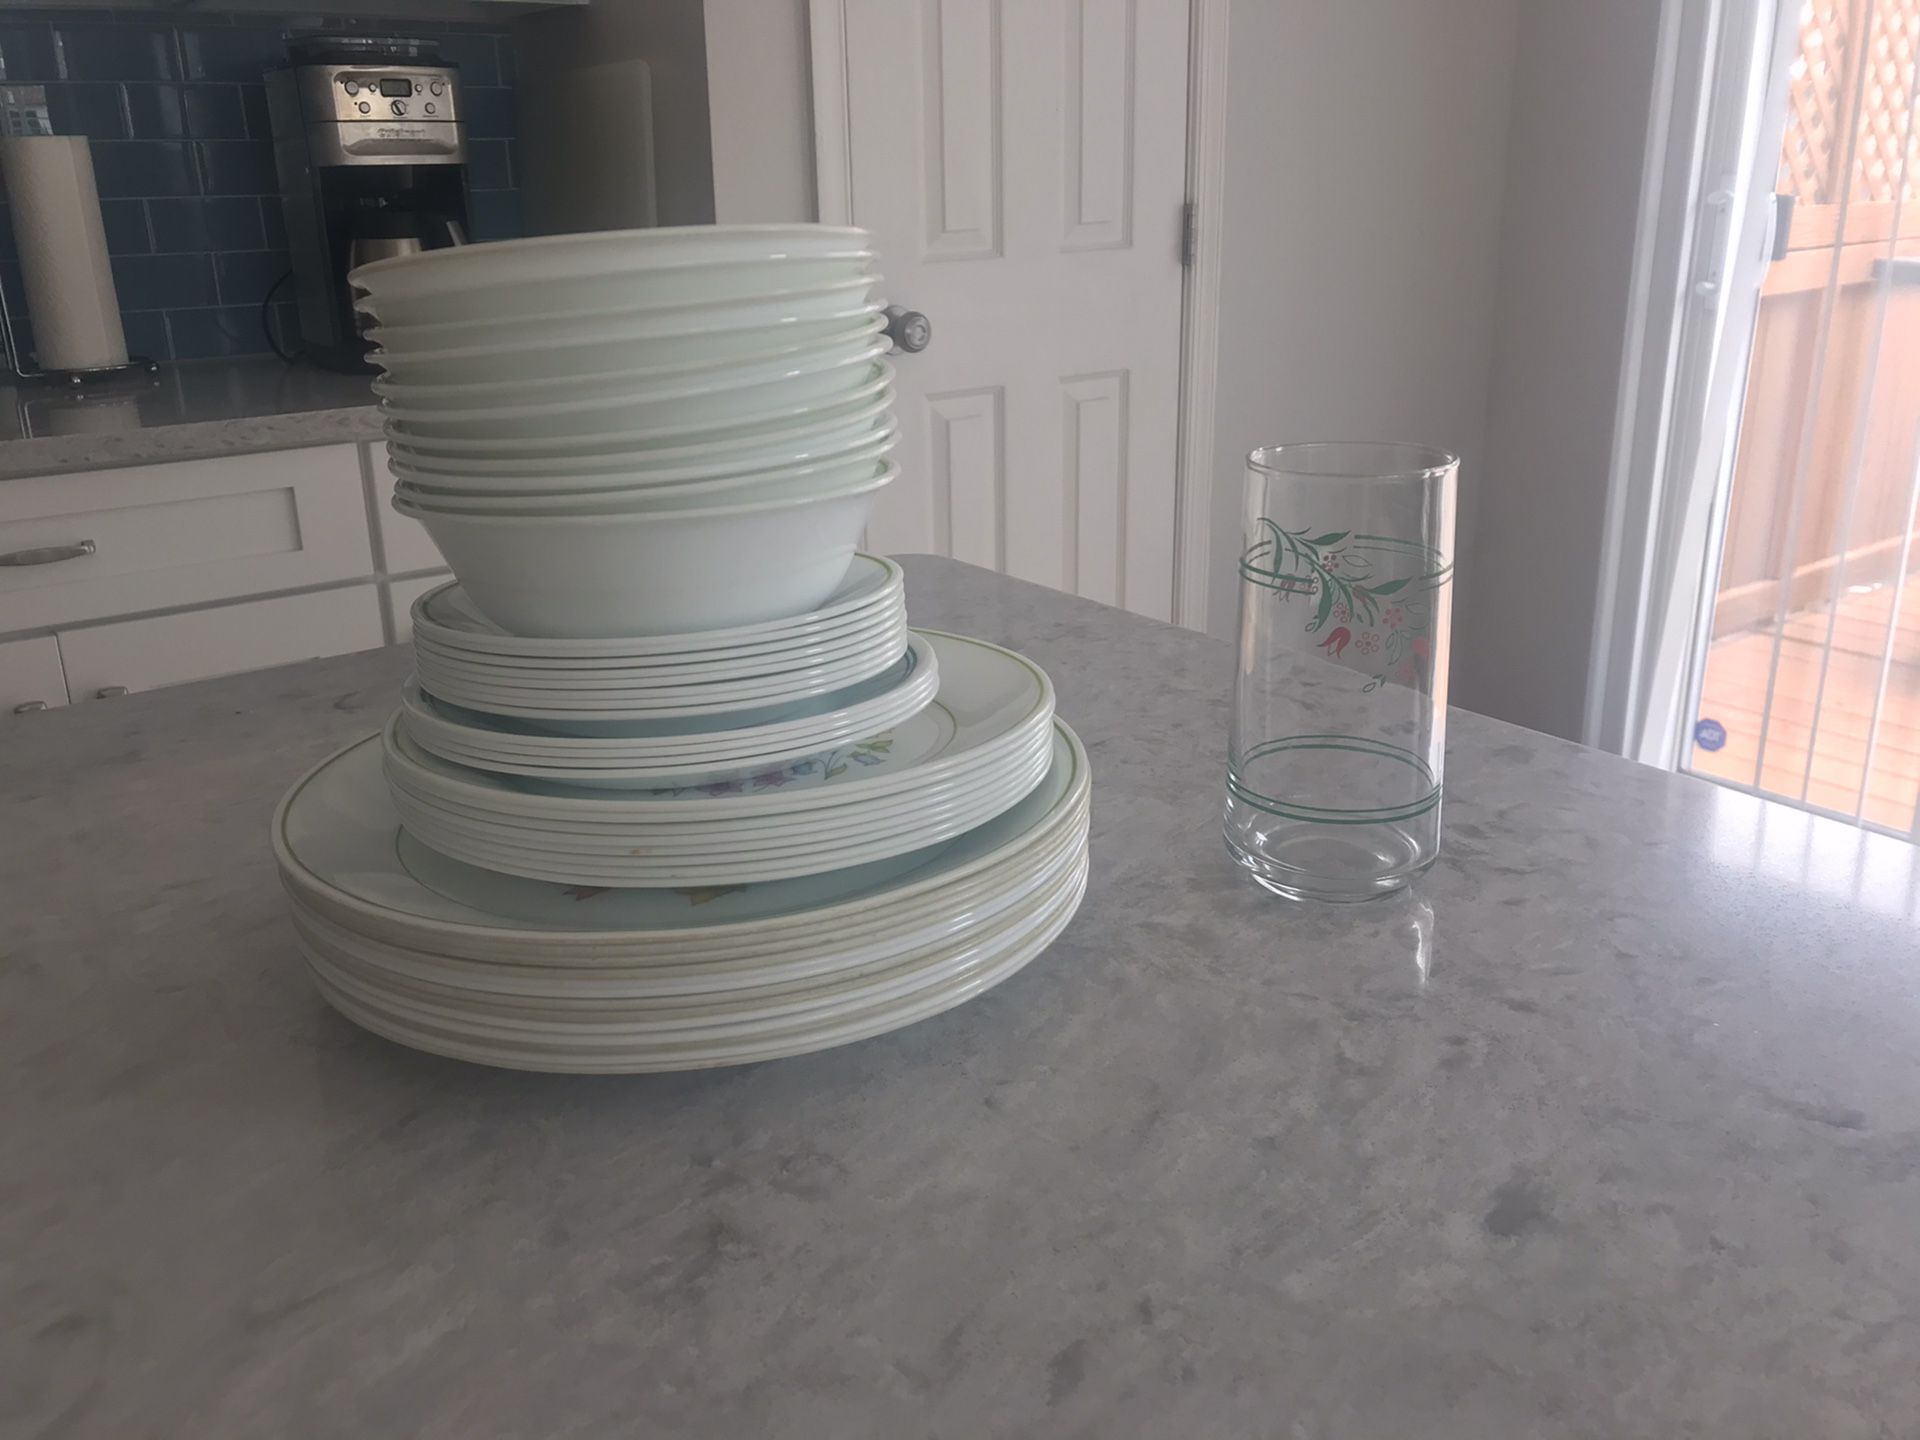 Corelle dish set - 45 plates, saucers, bowls and glass